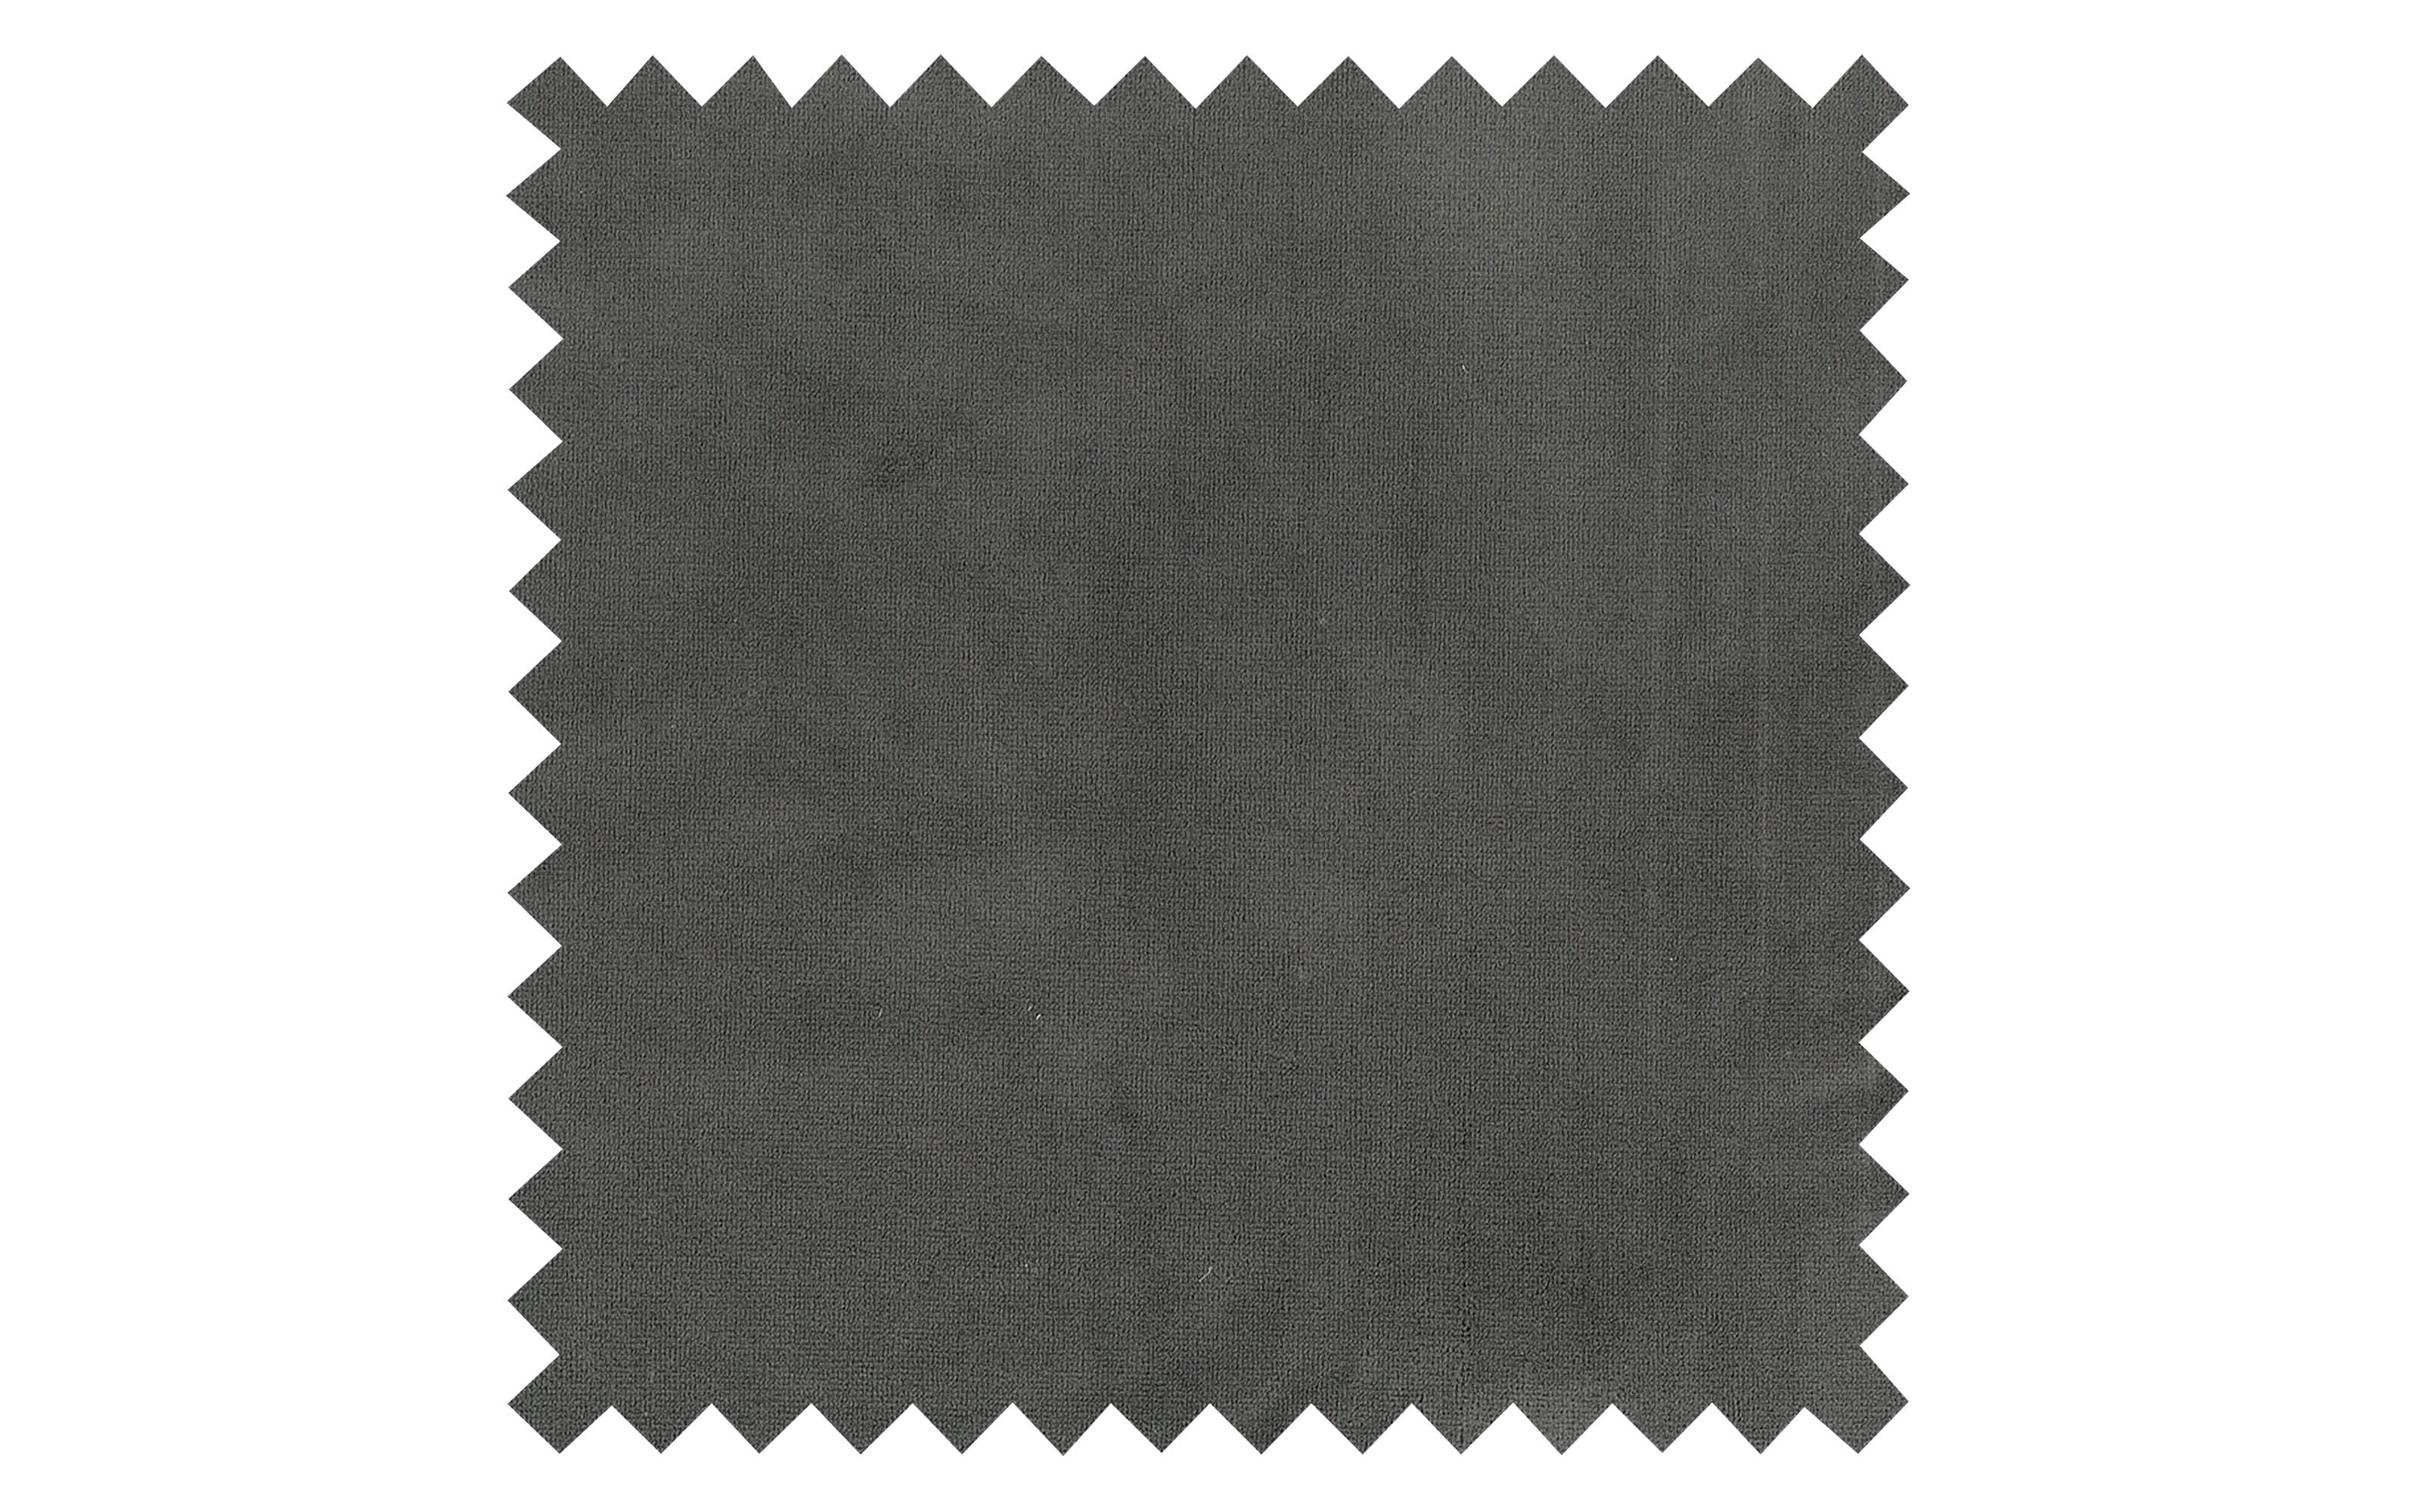 Boxspringbett Bella in grau, 180 x 200 cm, Härtegrad medium und fest